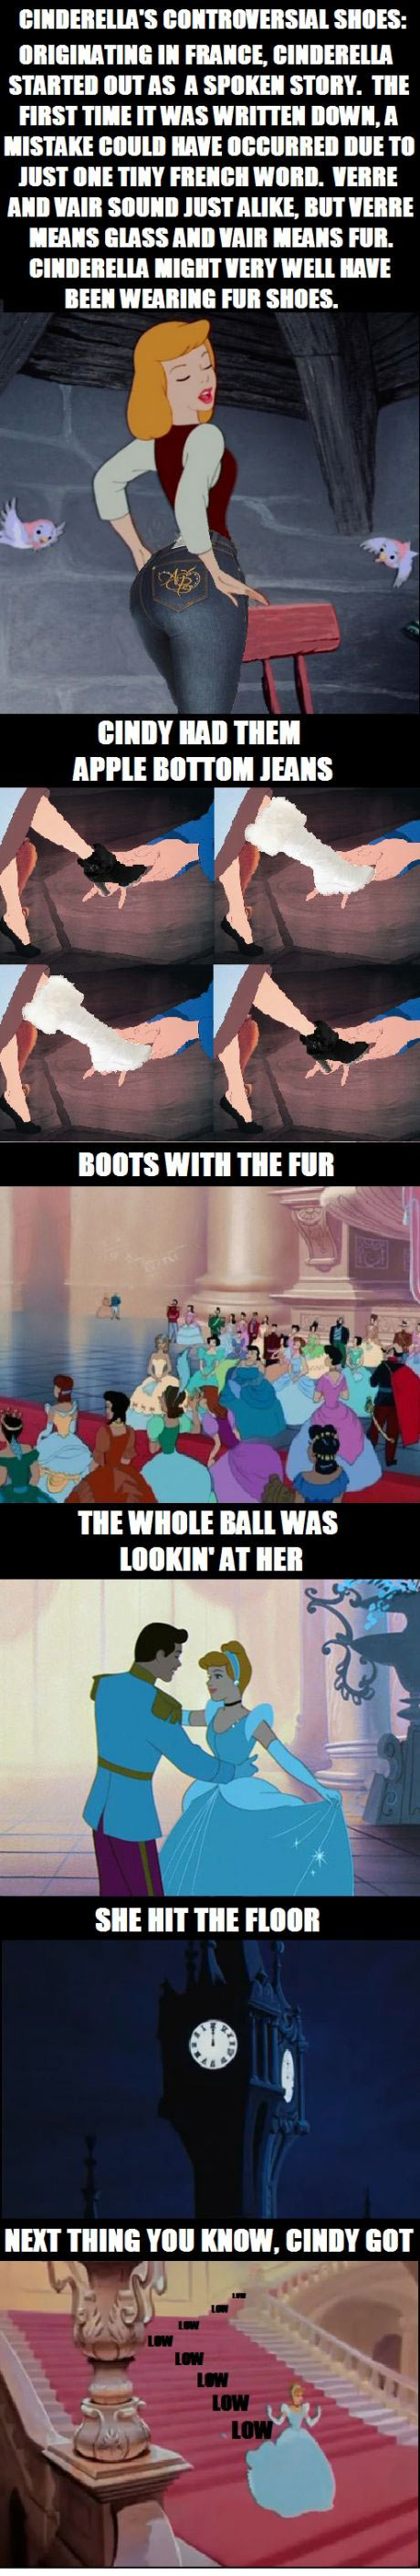 Cinderella's controversial shoes.